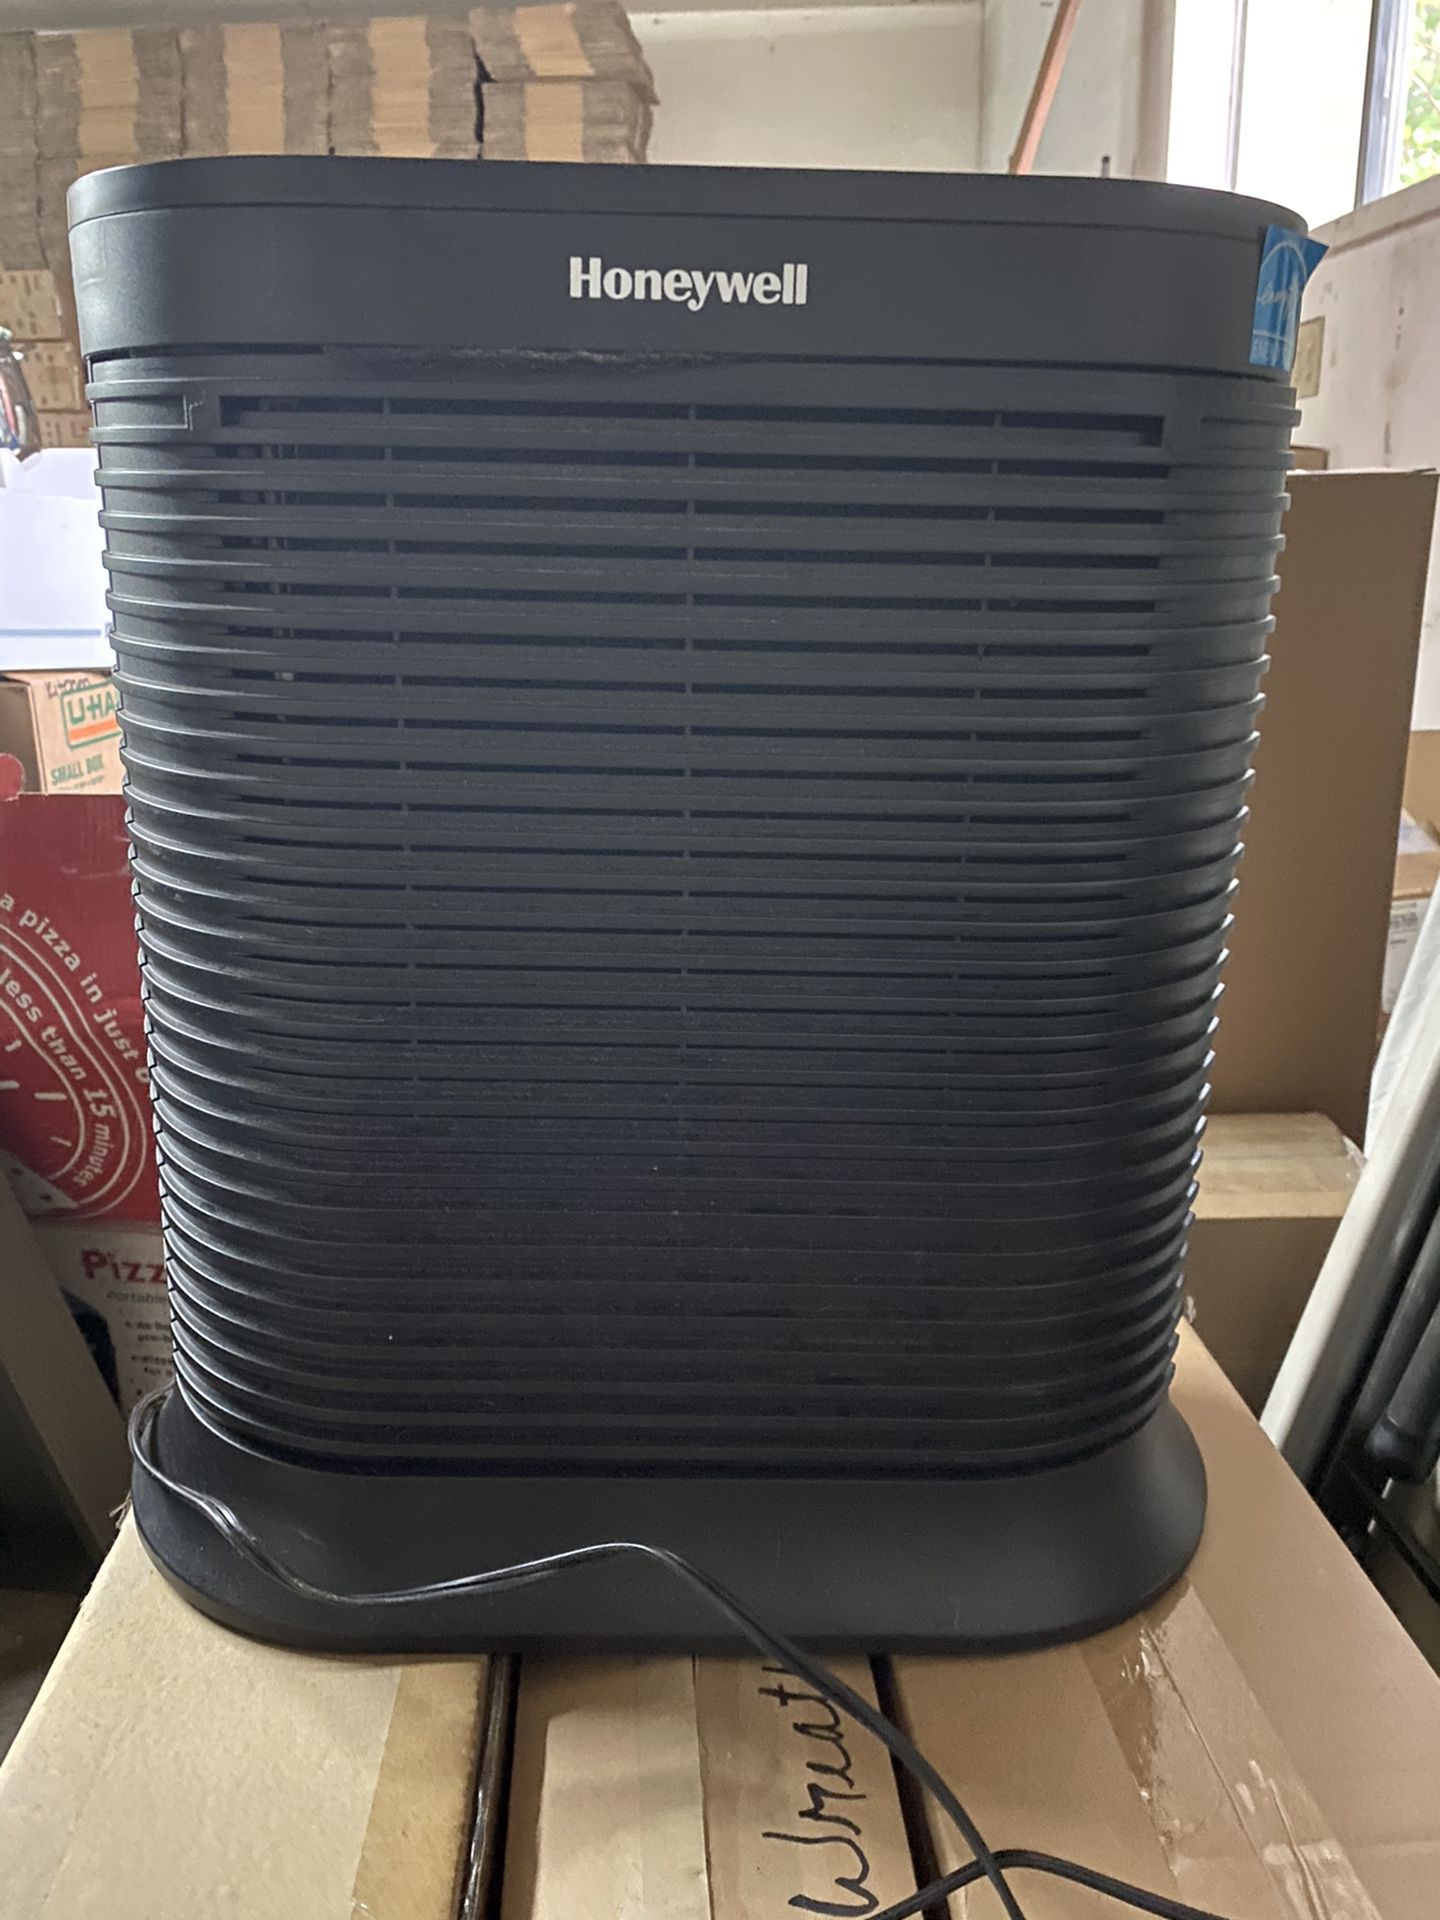 Honeywell HA202BHD Allergen Remover Air Purifier